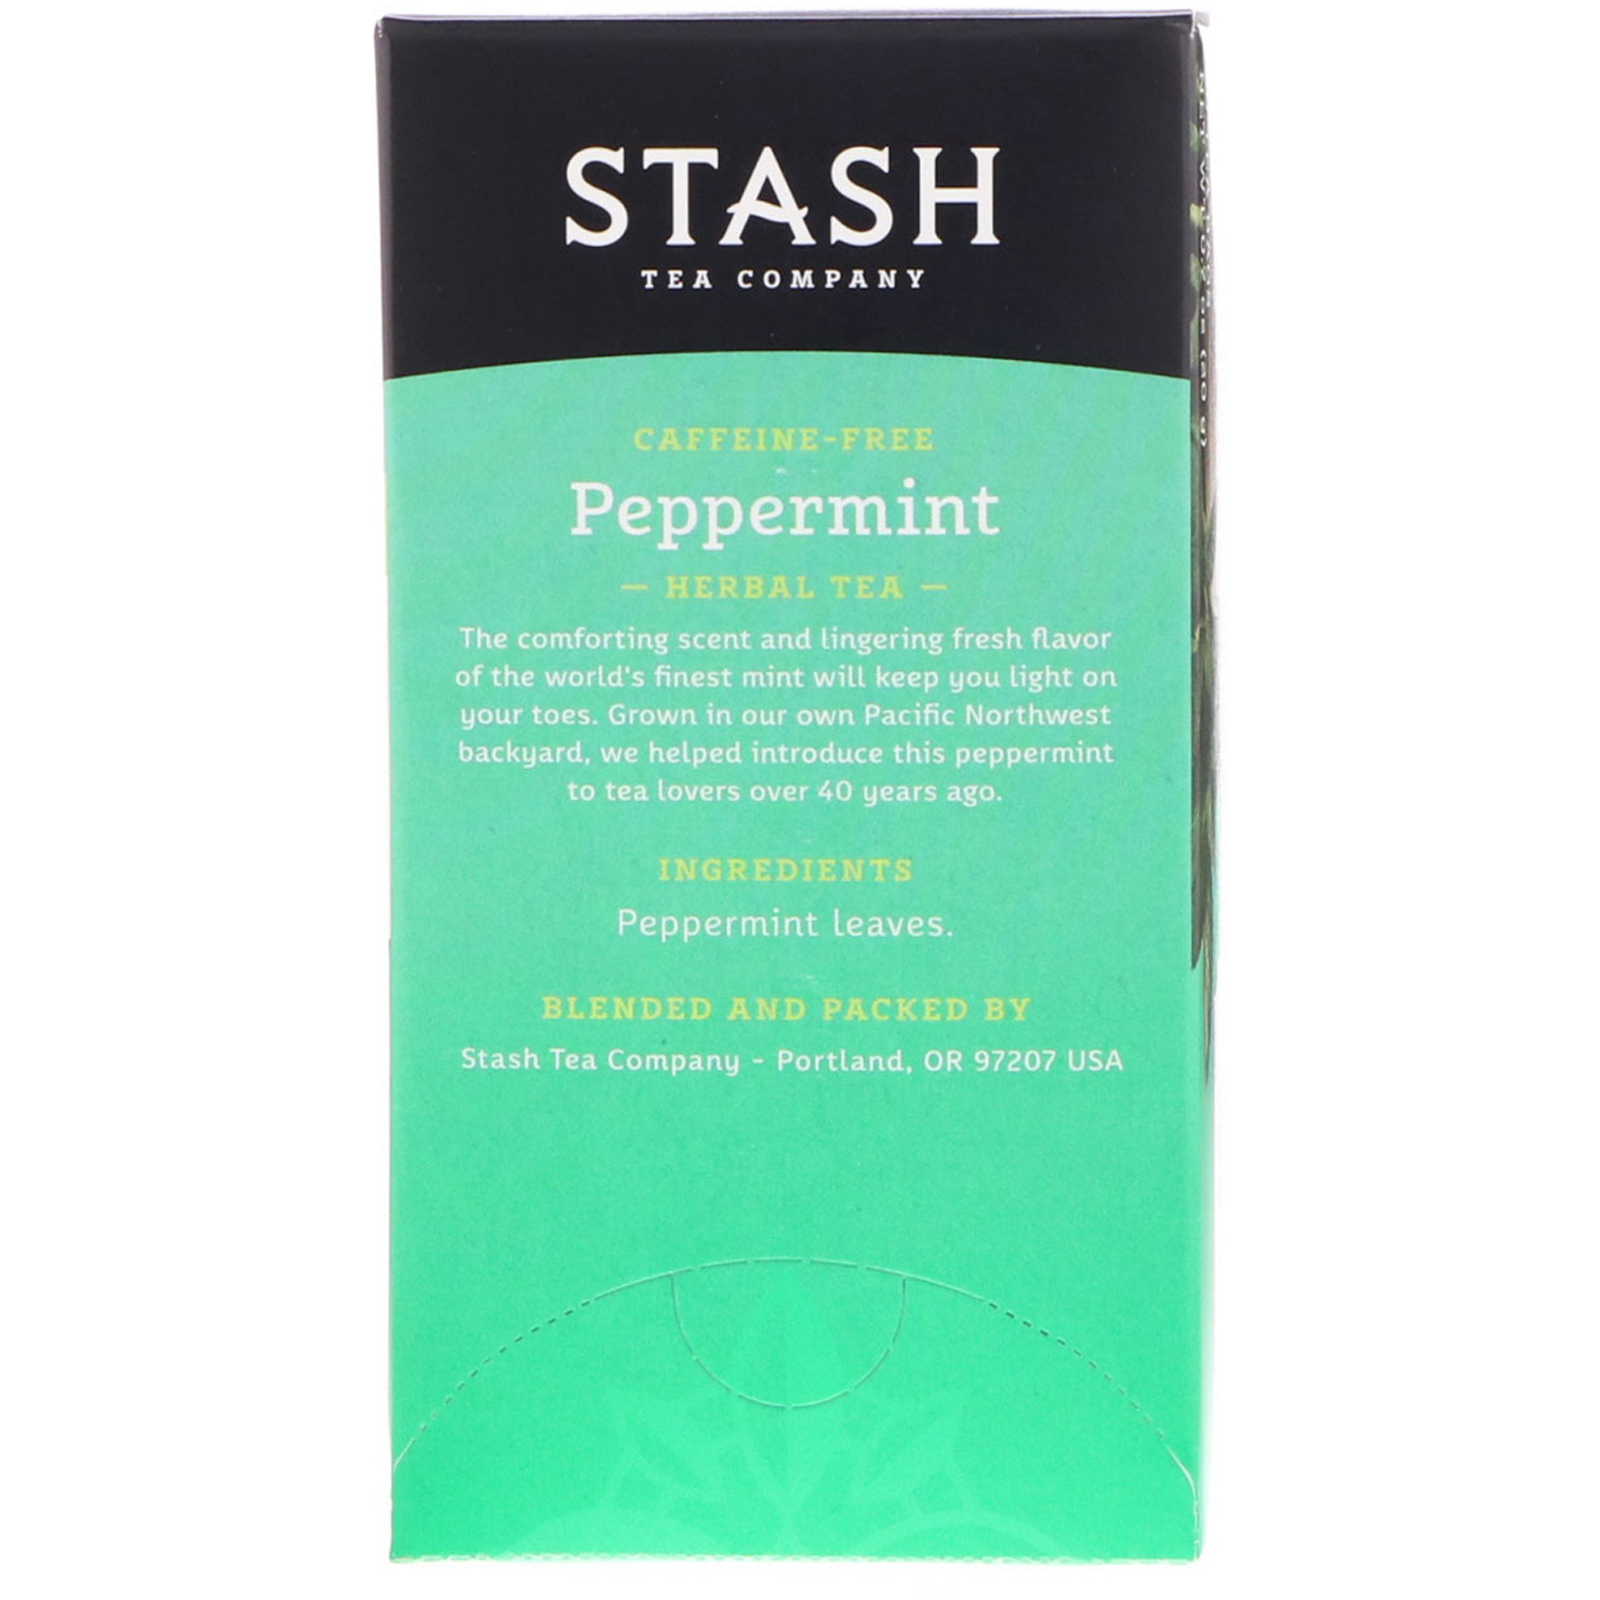 Stash Tea Herbal Tea Peppermint Caffeine Free 20 Tea Bags 07 Oz